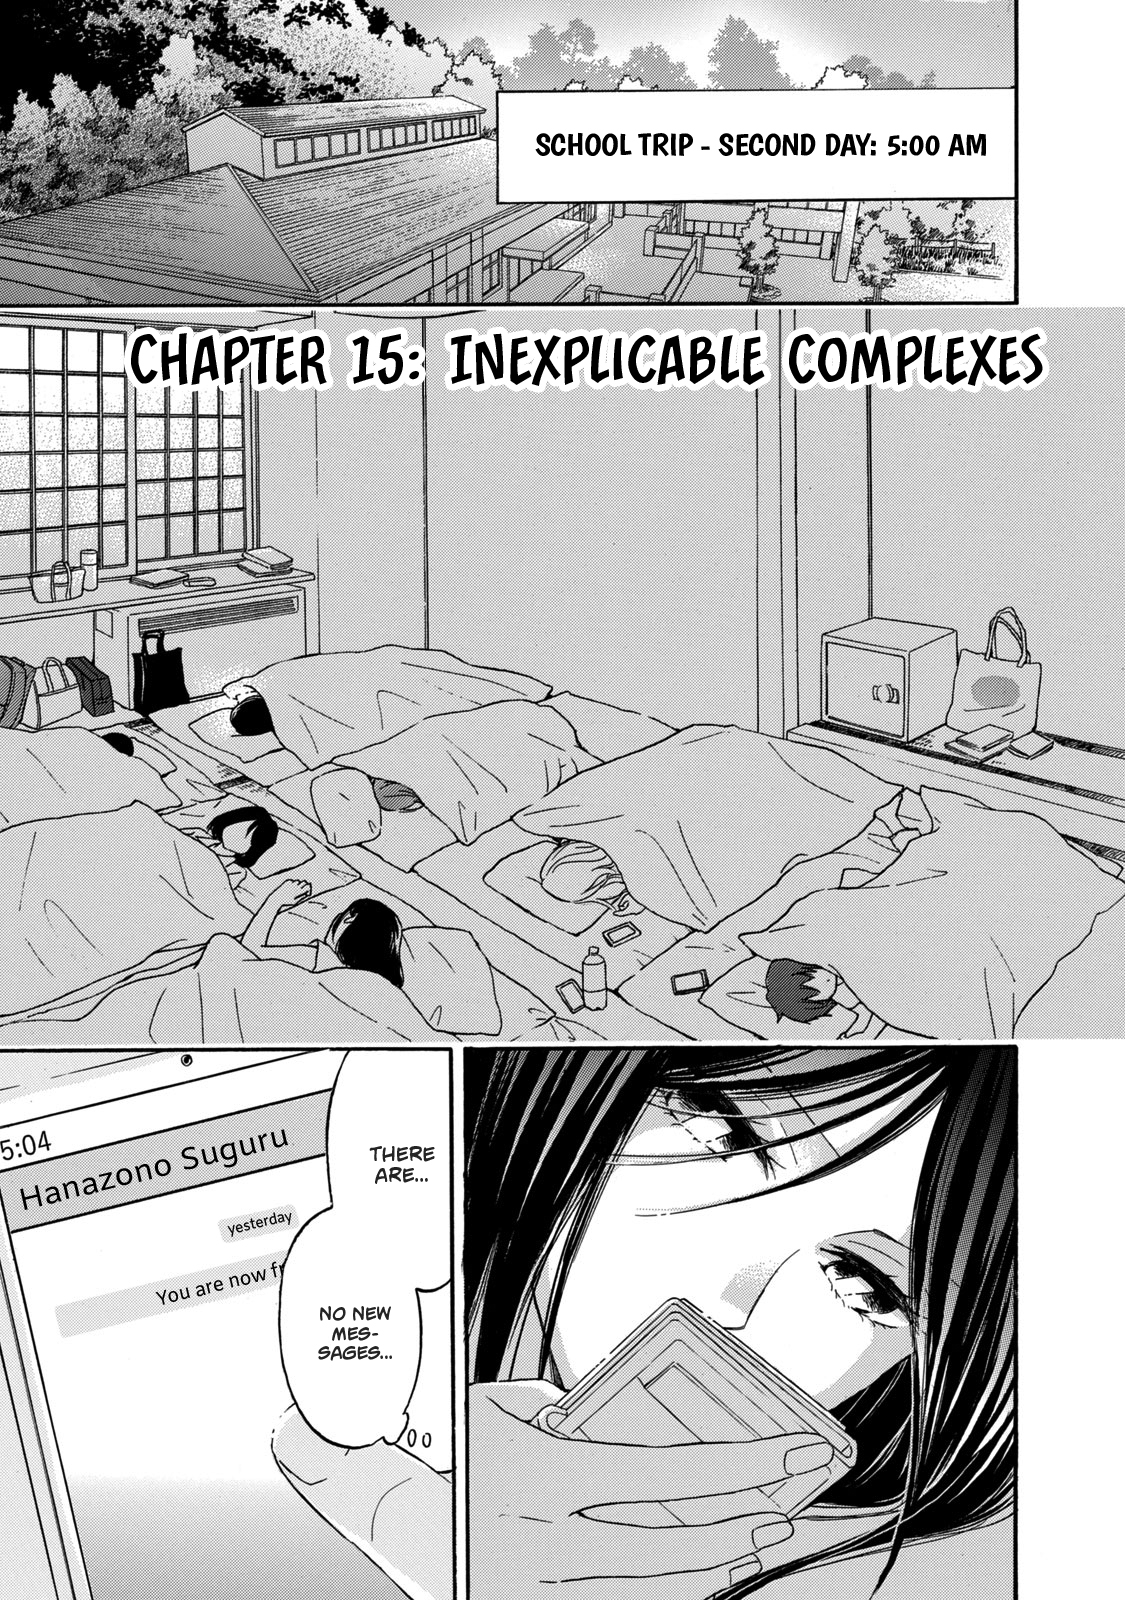 Hanazono and Kazoe's Bizarre After School Rendezvous Vol. 2 Ch. 15 Inexplicable Complexes